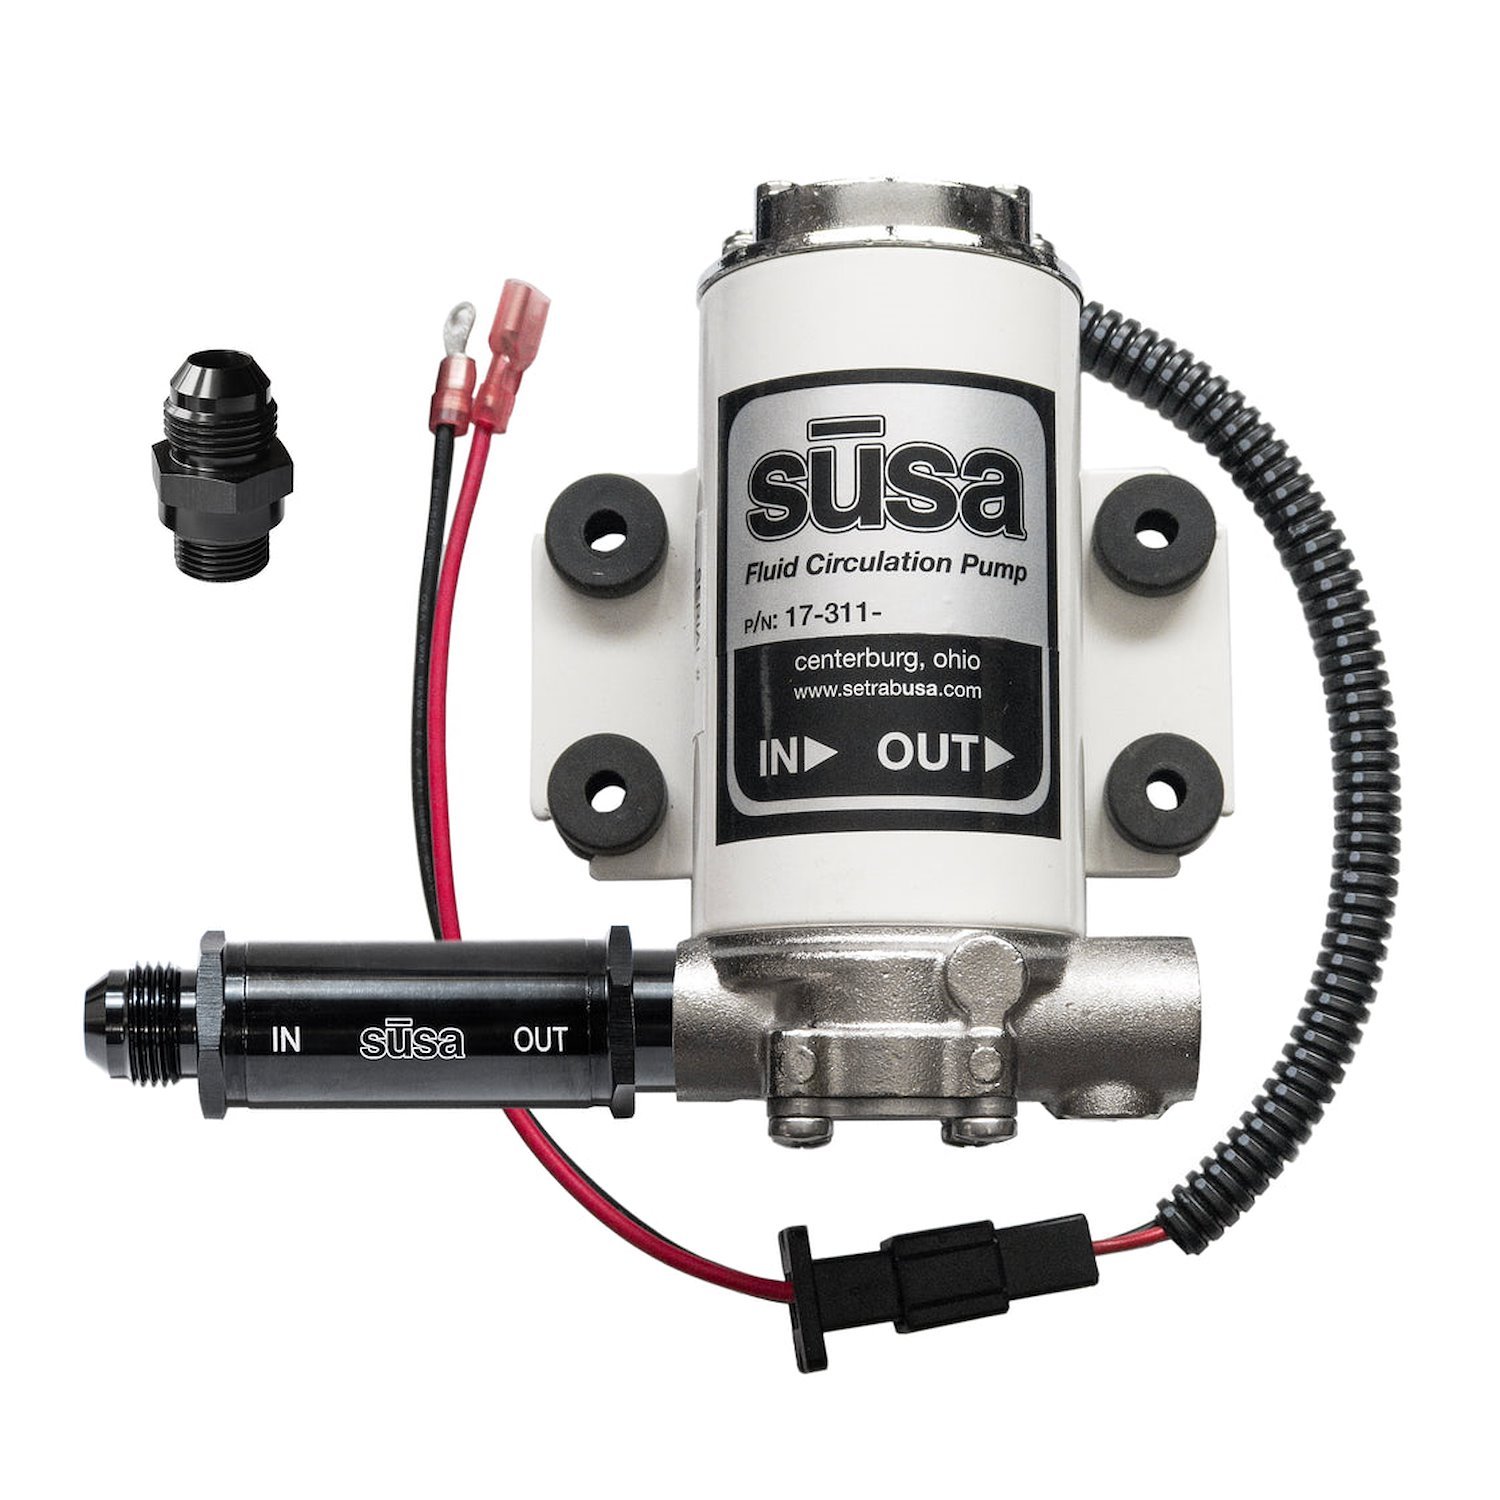 17-311-06-IF05 Mini Gear Oil Circulation Pump, Fluid Pump w/ AN06 Fitting & AN06 Filter